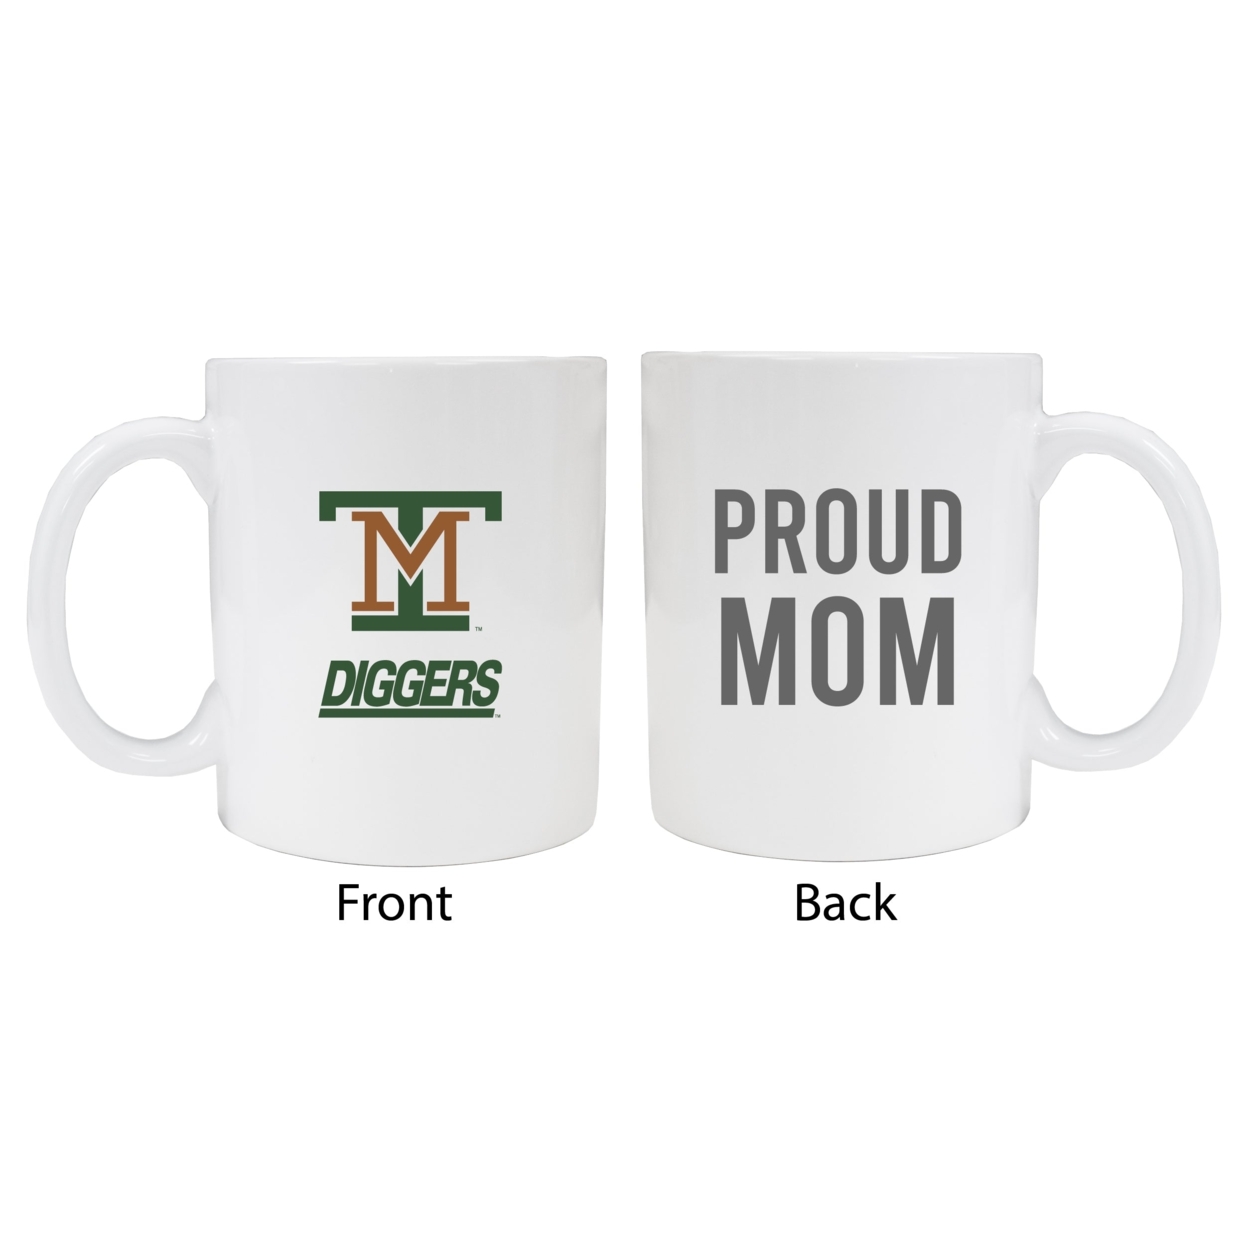 Montana Tech Proud Mom Ceramic Coffee Mug - White (2 Pack)